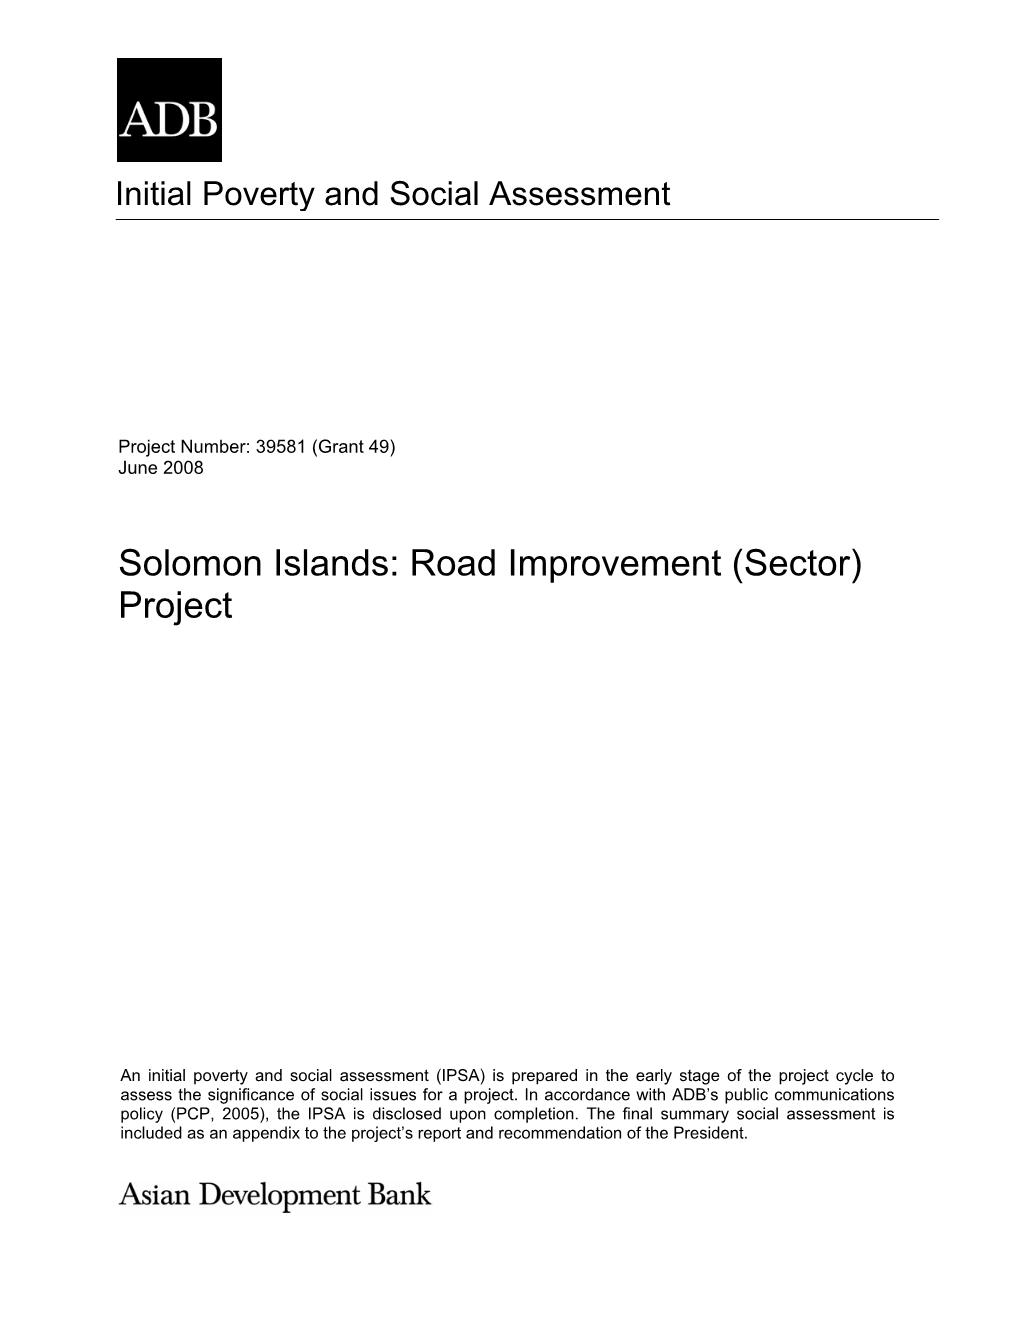 Solomon Islands: Road Improvement (Sector) Project